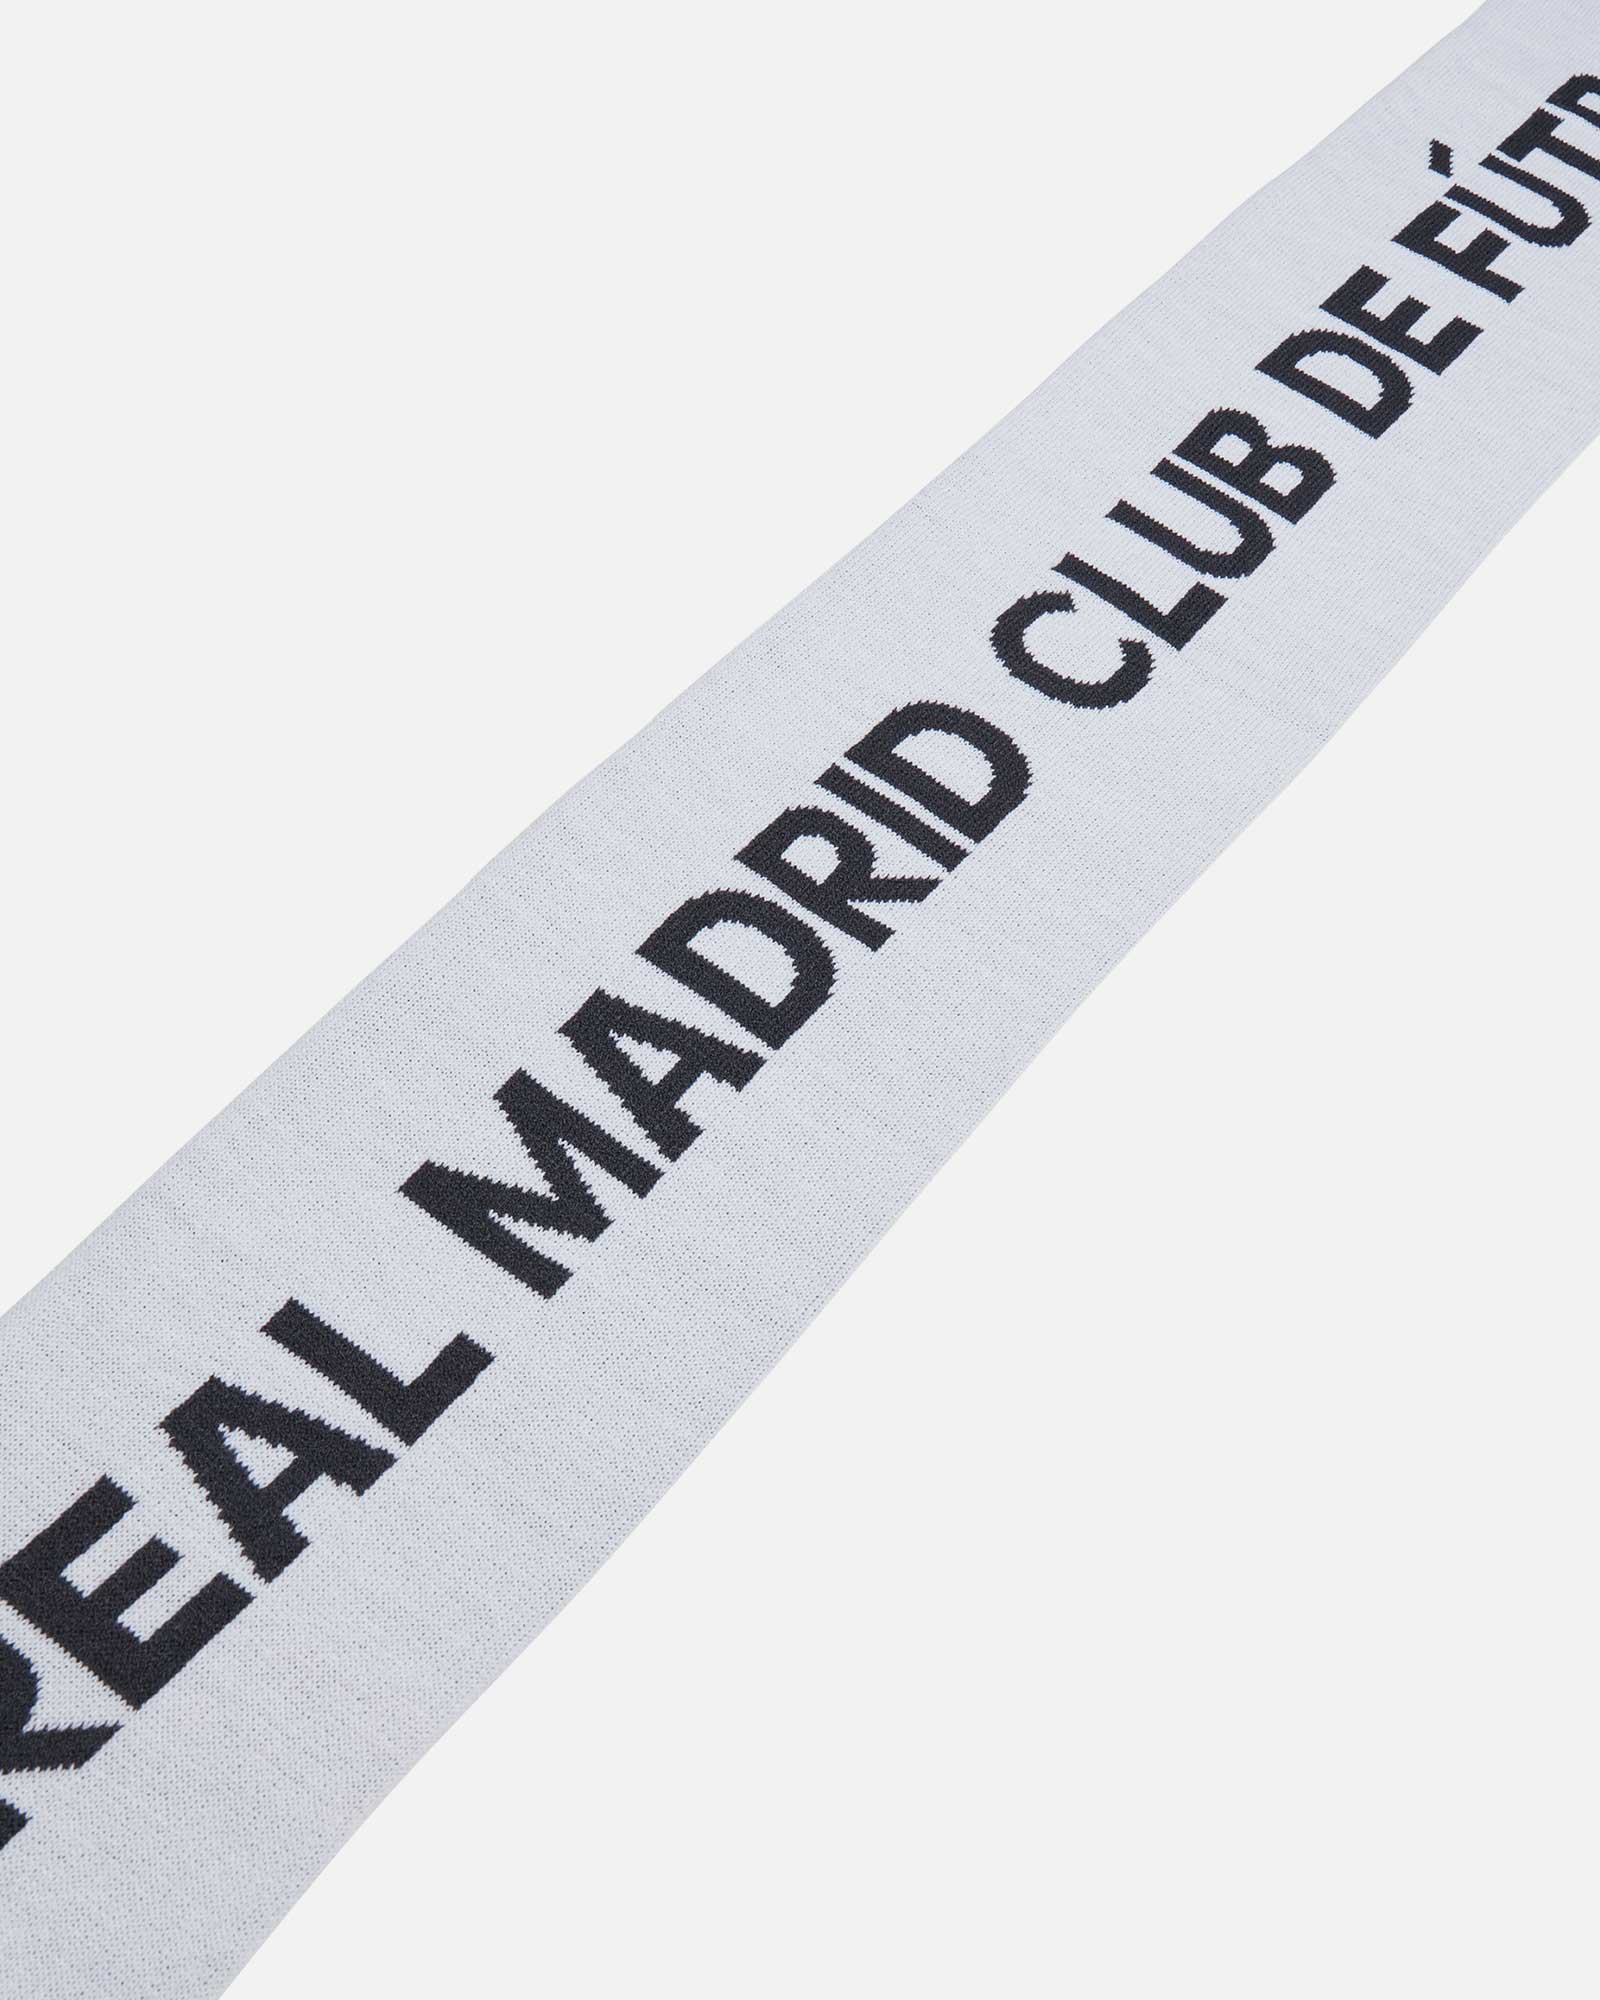  Bufanda Real Madrid 2024 Oficial